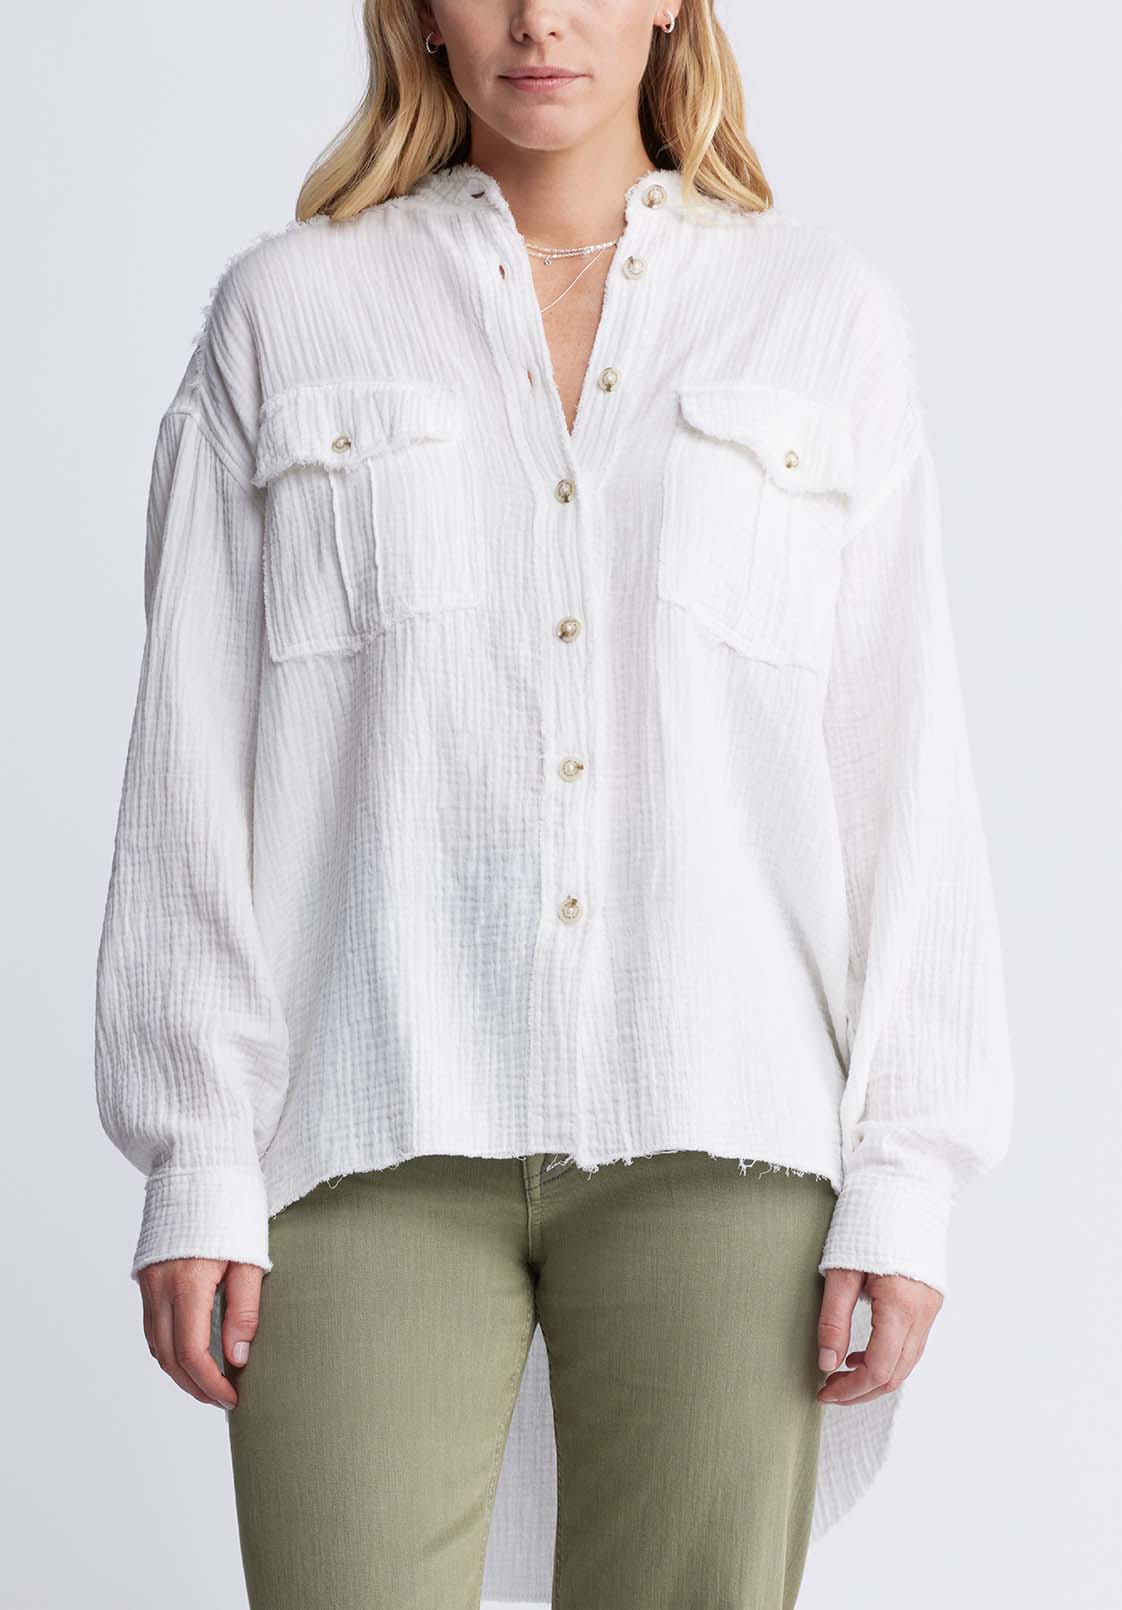 Tangerine Top  Tops, Long sleeve blouse, Women